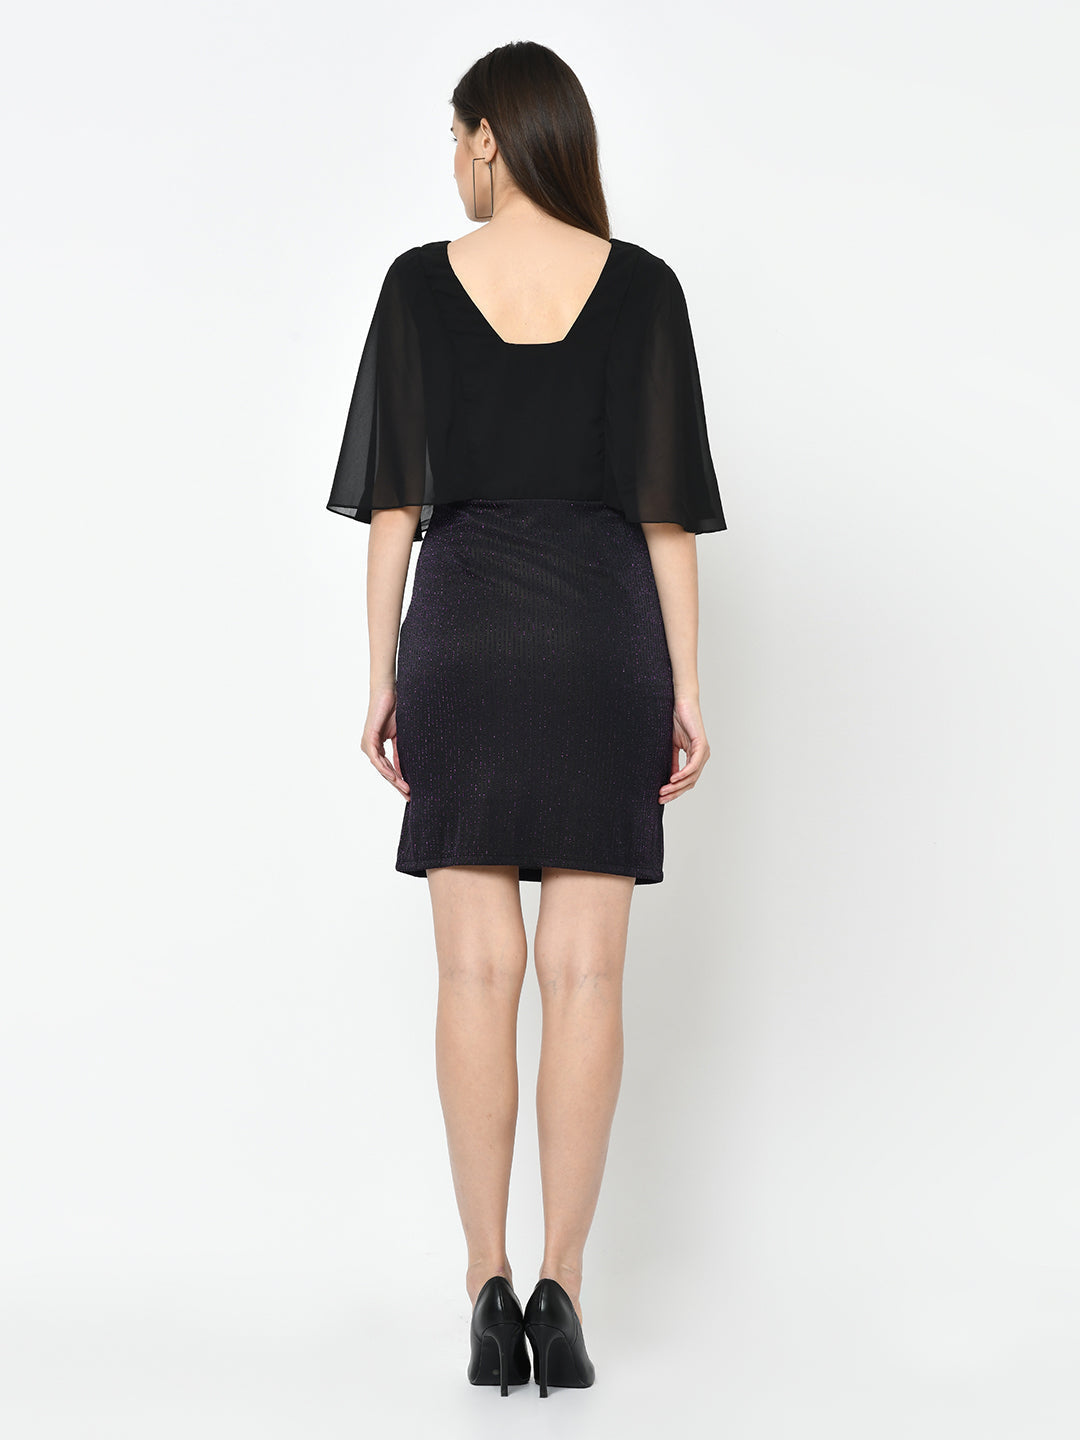 Black Half Sleeves 2 Fir 1 With Shimmer Dress